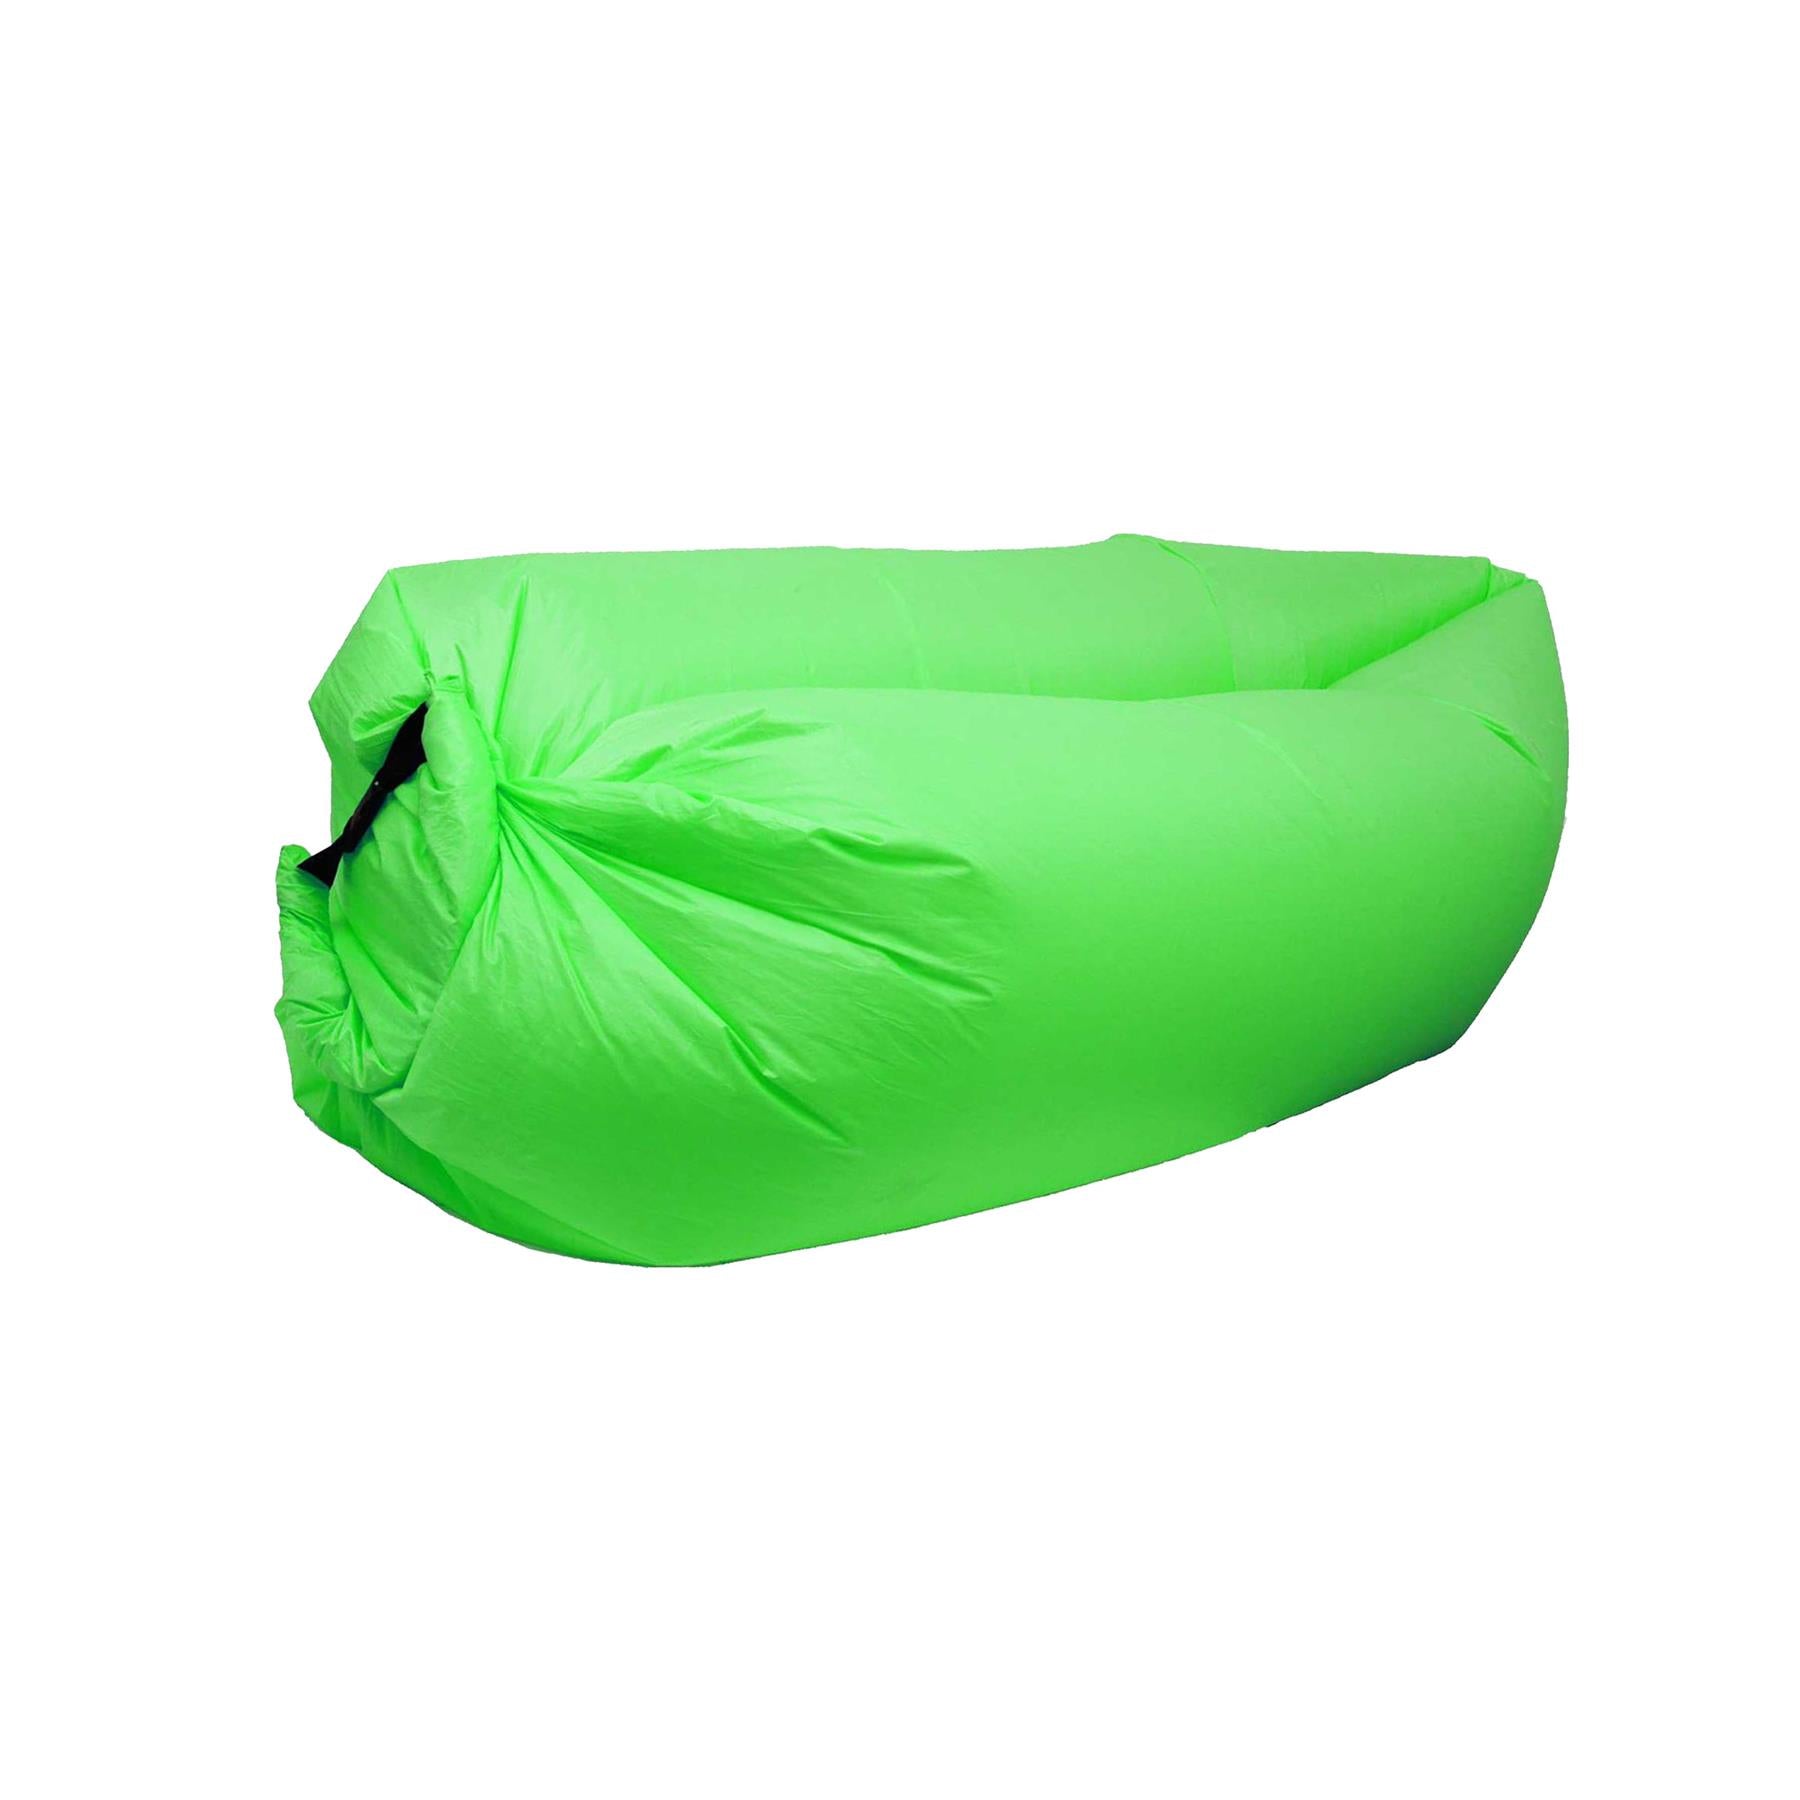 Green Inflatable Sofa Air